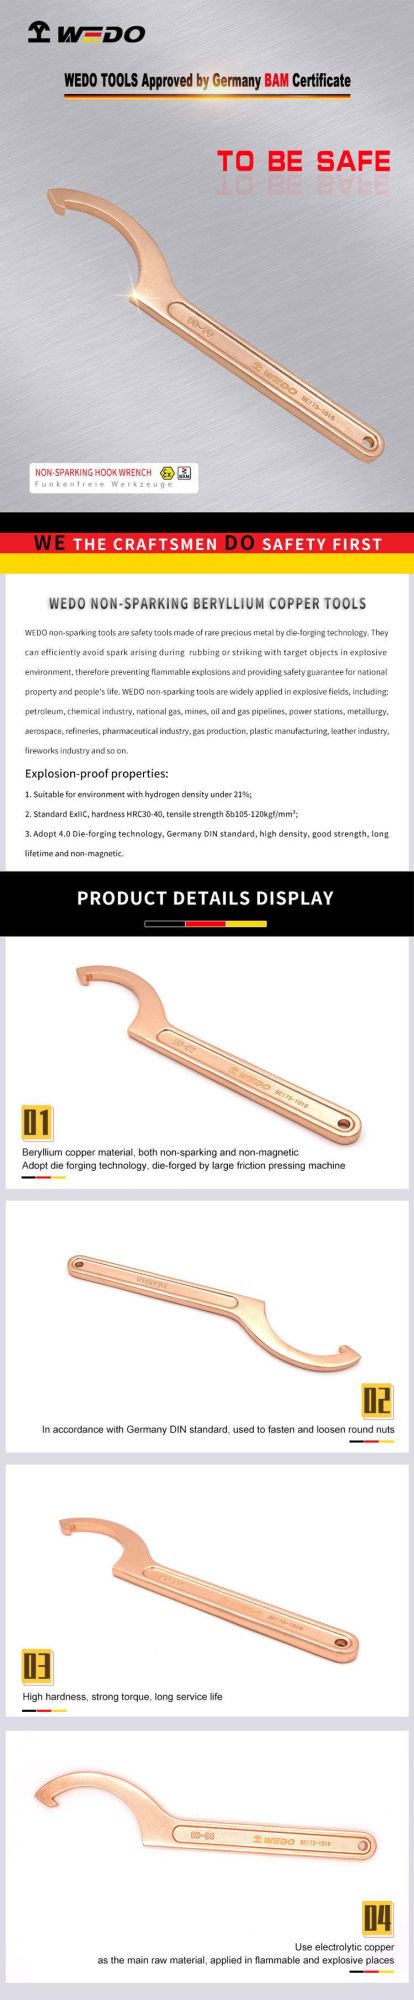 Wedo Non Sparking Beryllium Copper Hook Wrench Bam/FM/GS Certified